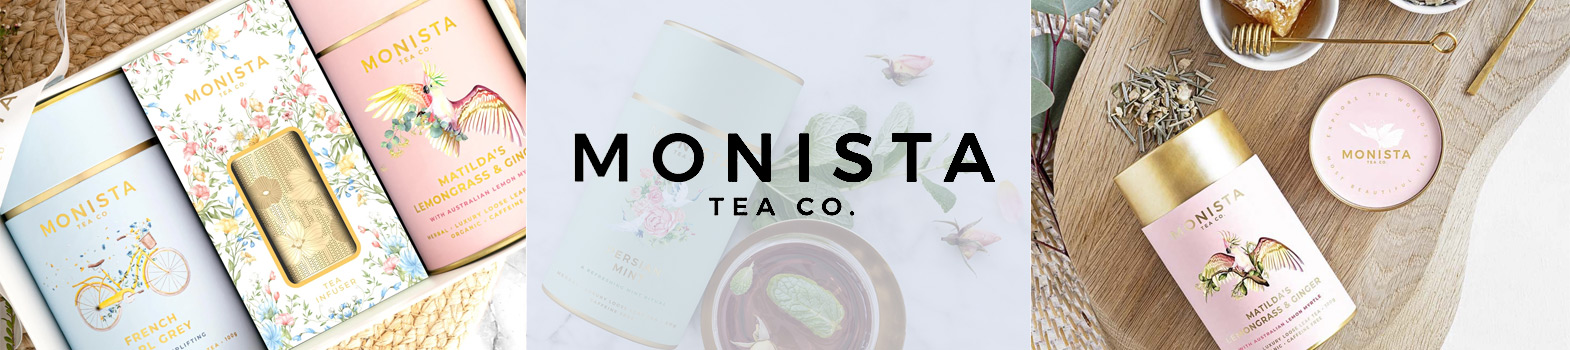 Monista Tea Co.